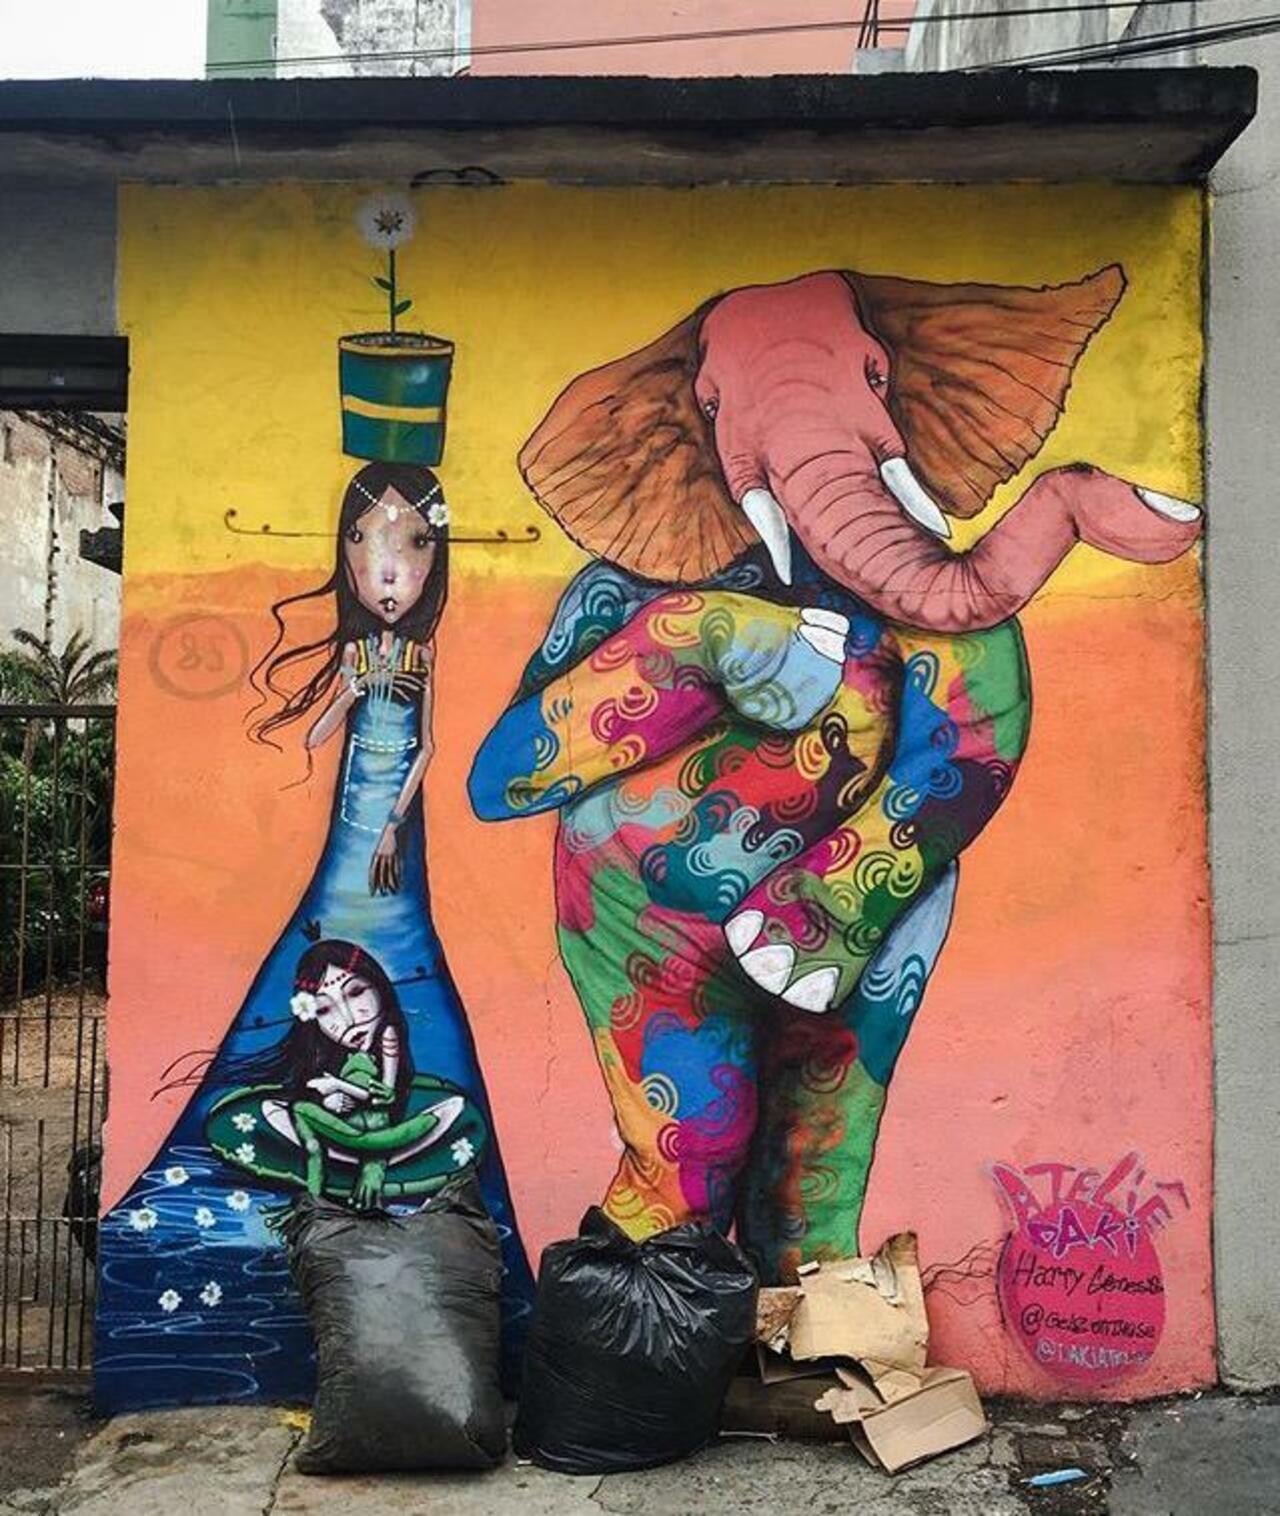 Street Art by Harry Geneis & Gelson in São Paulo 

#art #mural #graffiti #streetart http://t.co/LdYiYQEipJ